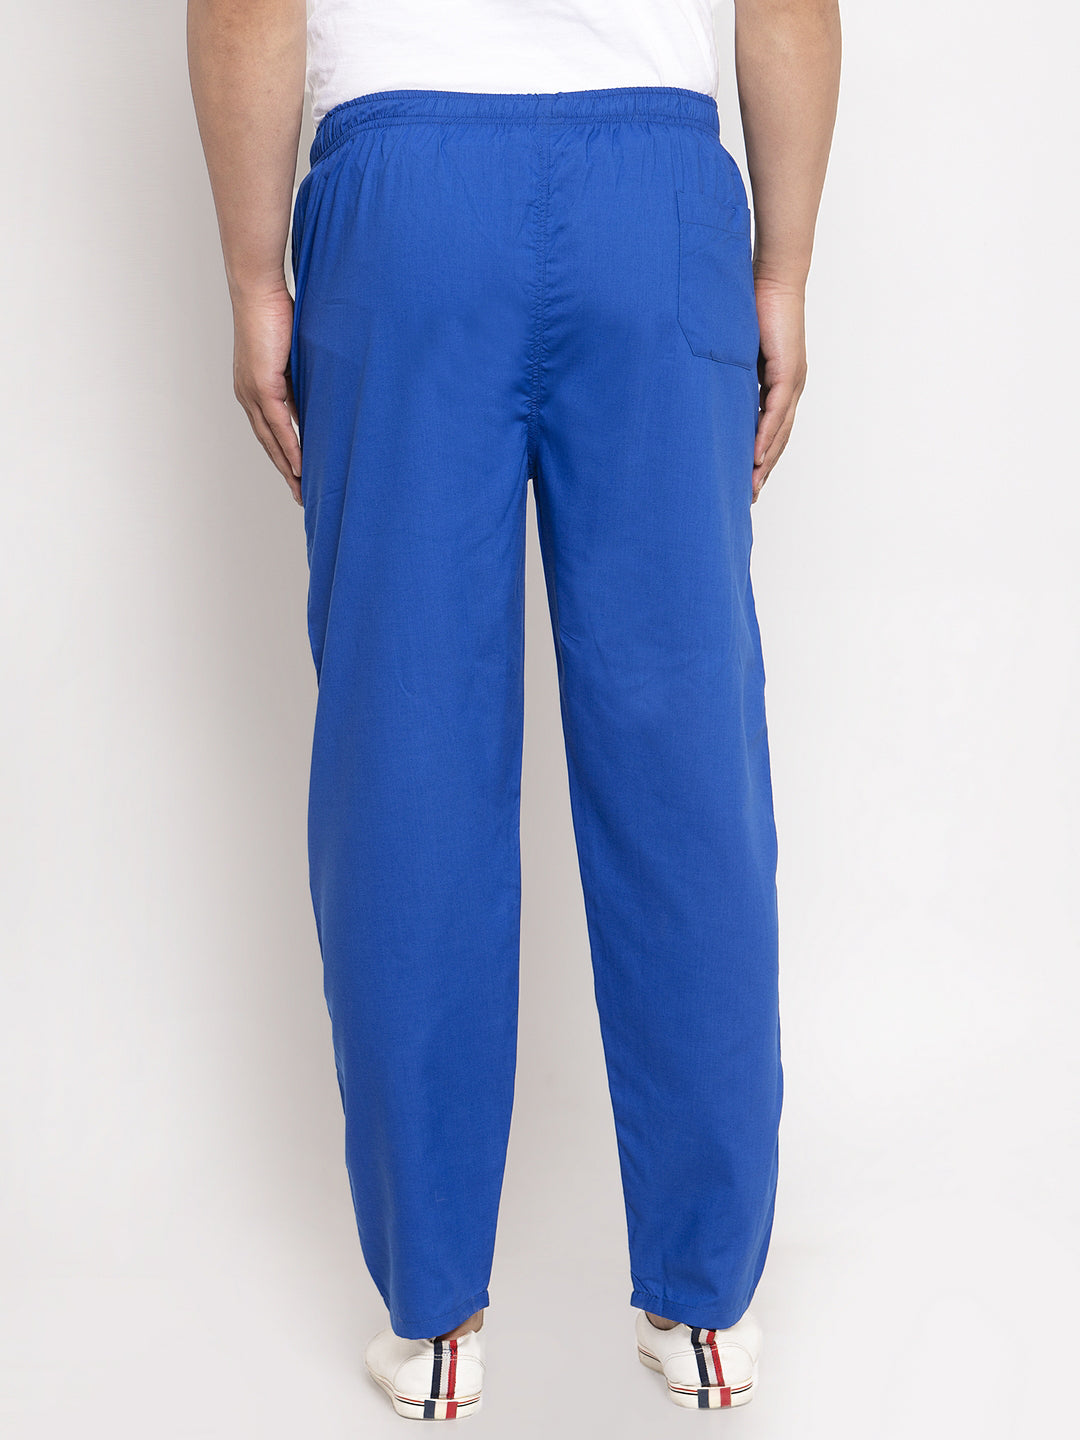 Men's Blue Solid Cotton Track Pants ( JOG 011Royal-Blue ) - Jainish